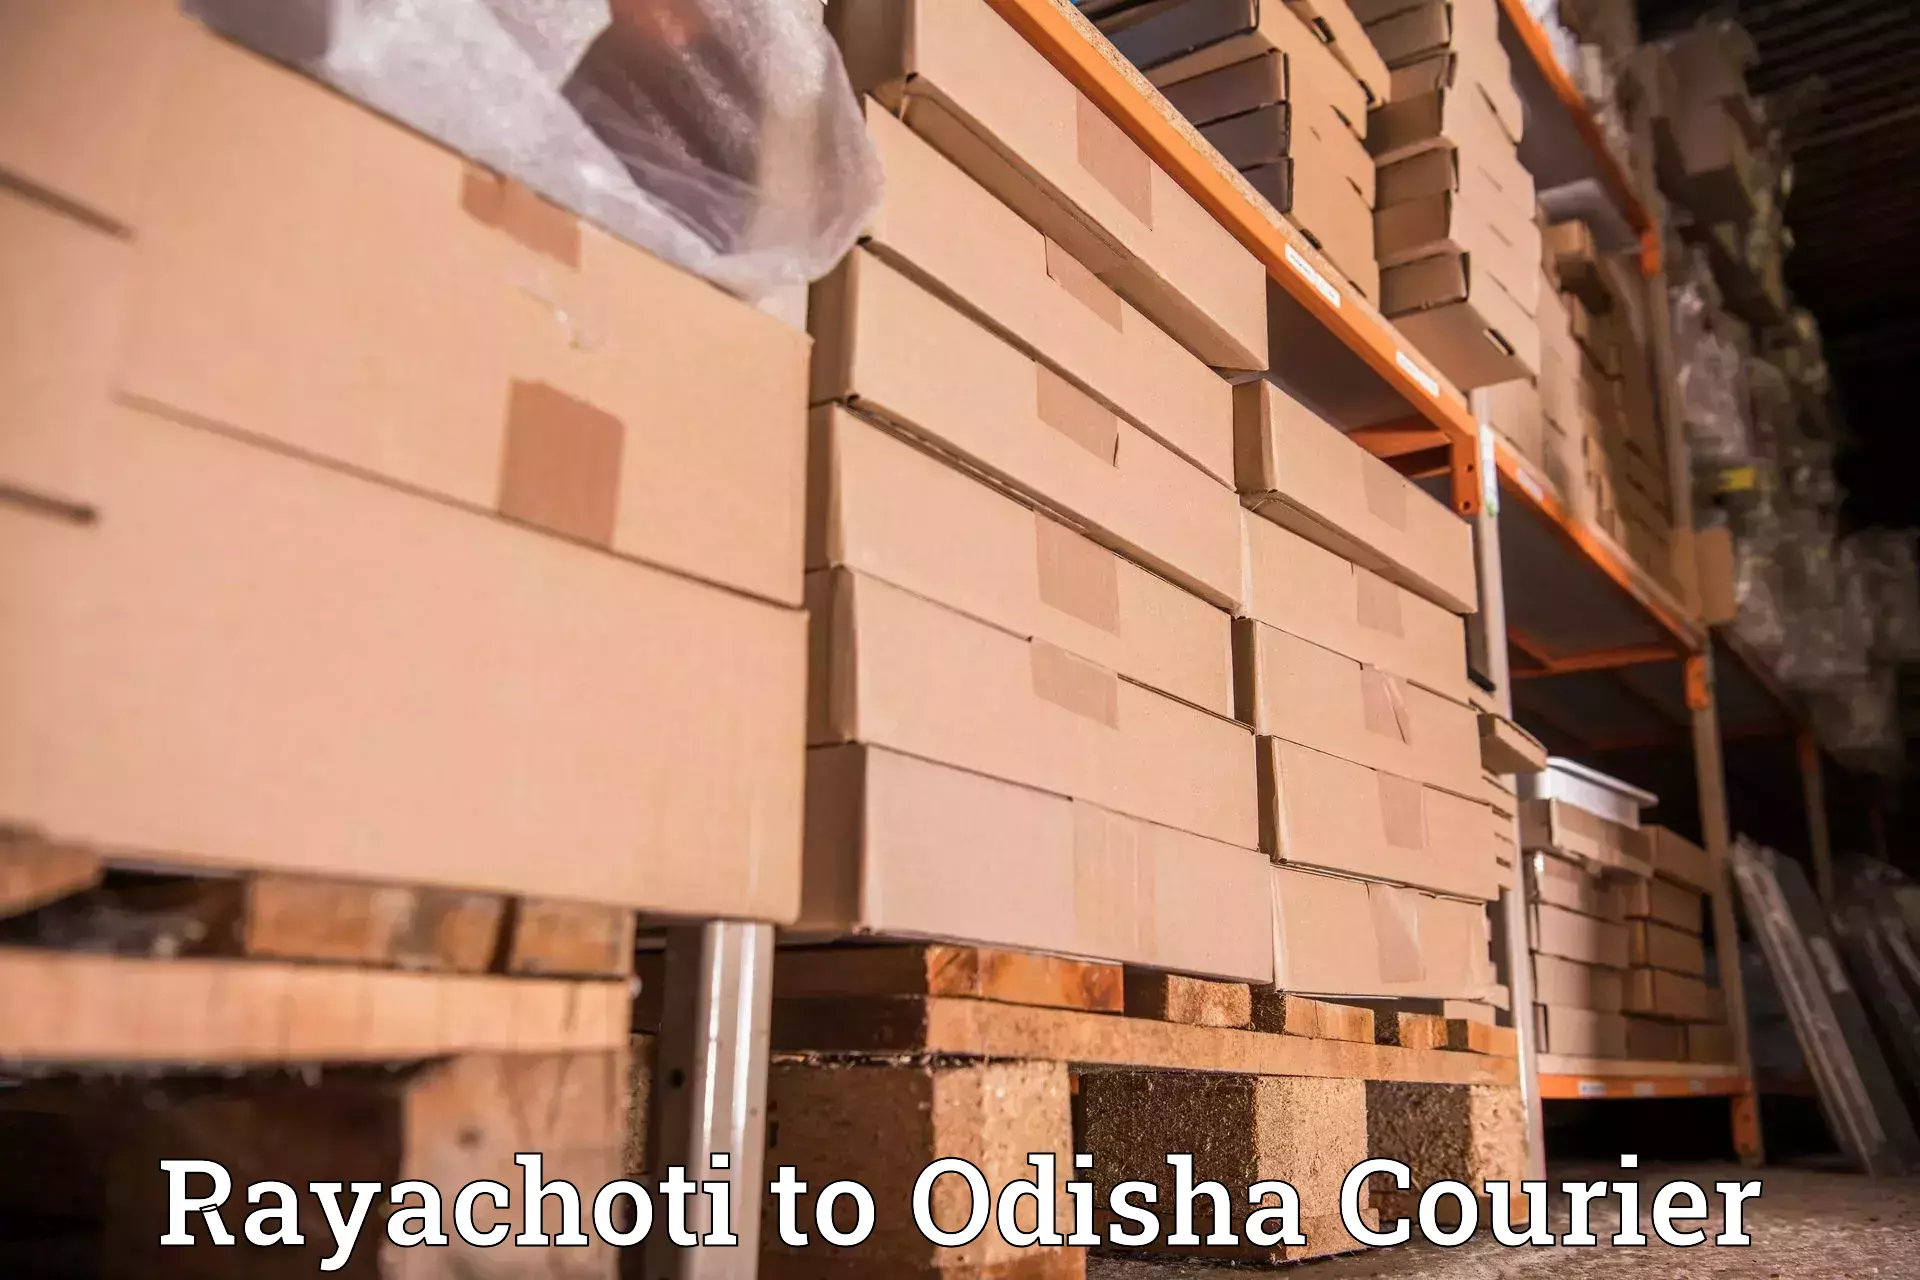 Courier service comparison Rayachoti to Sohela